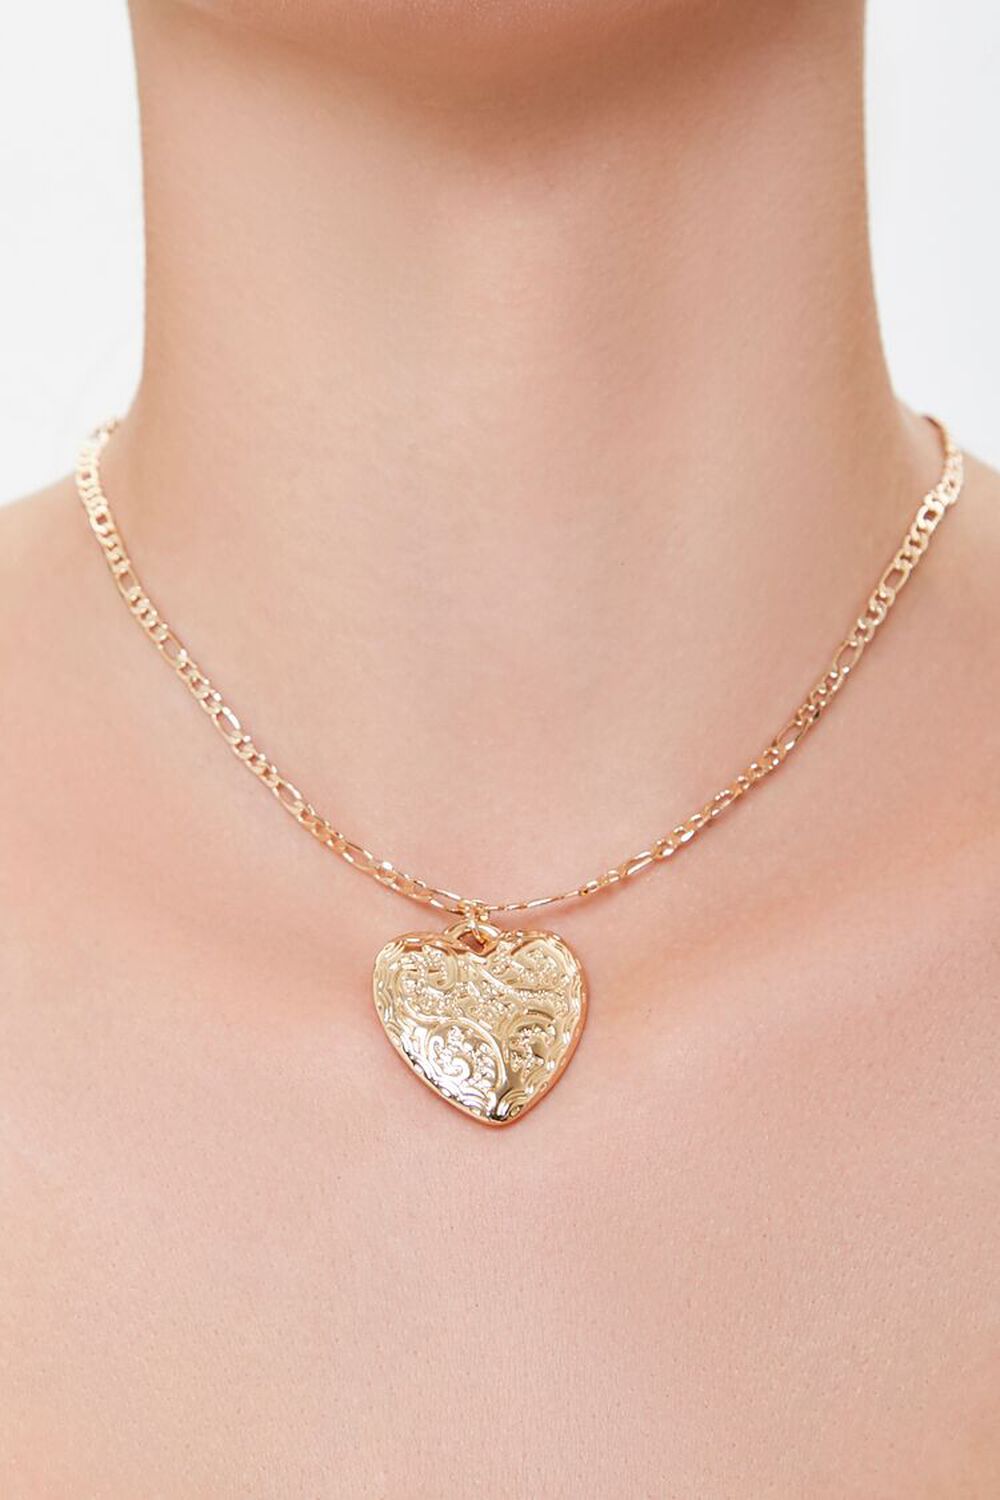 Heart Pendant Necklace, image 1